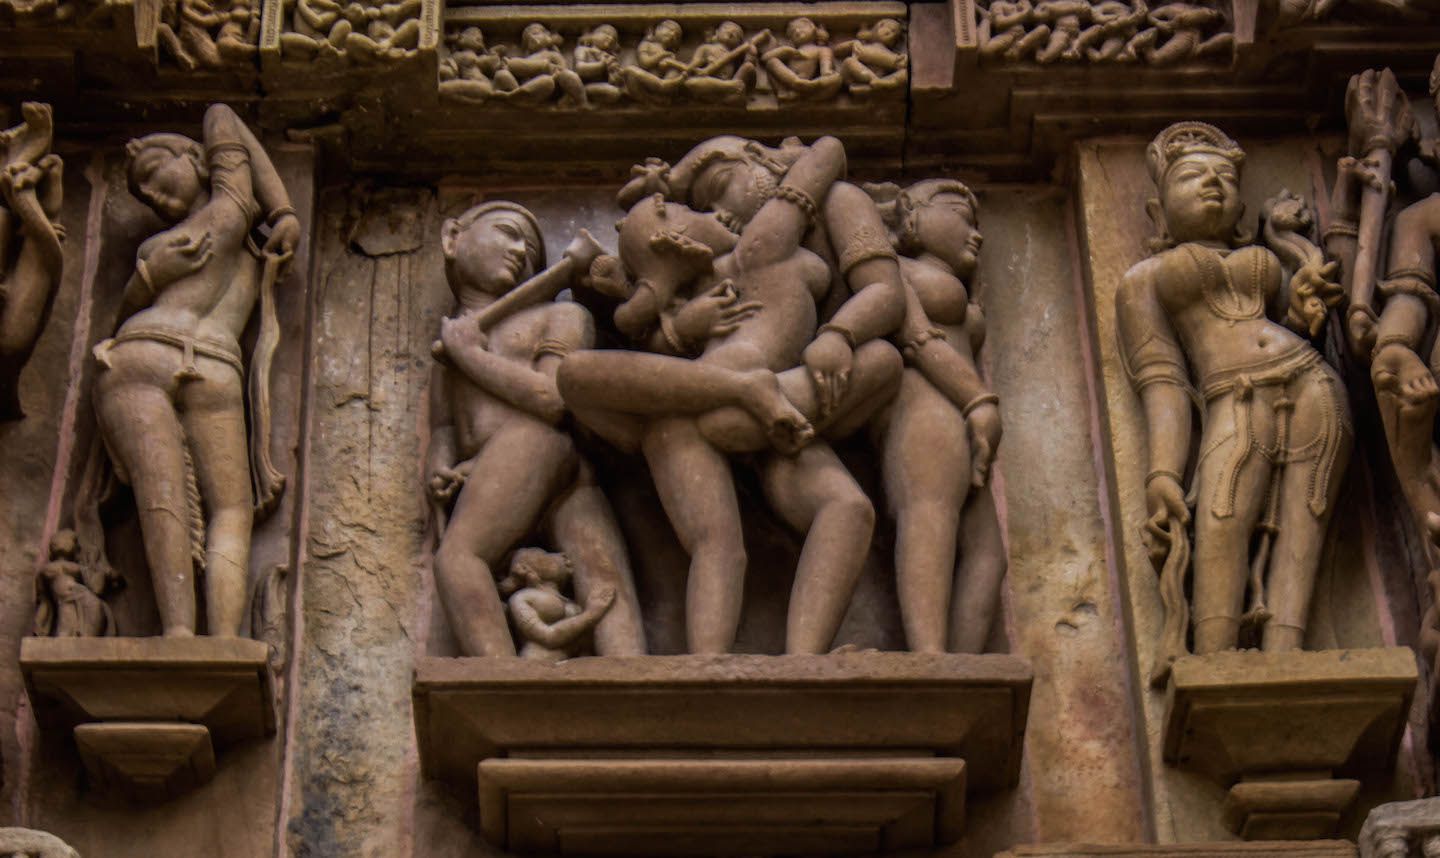 Acrobatic sex position on the walls of the Lakshmana temple, Khajuraho, India